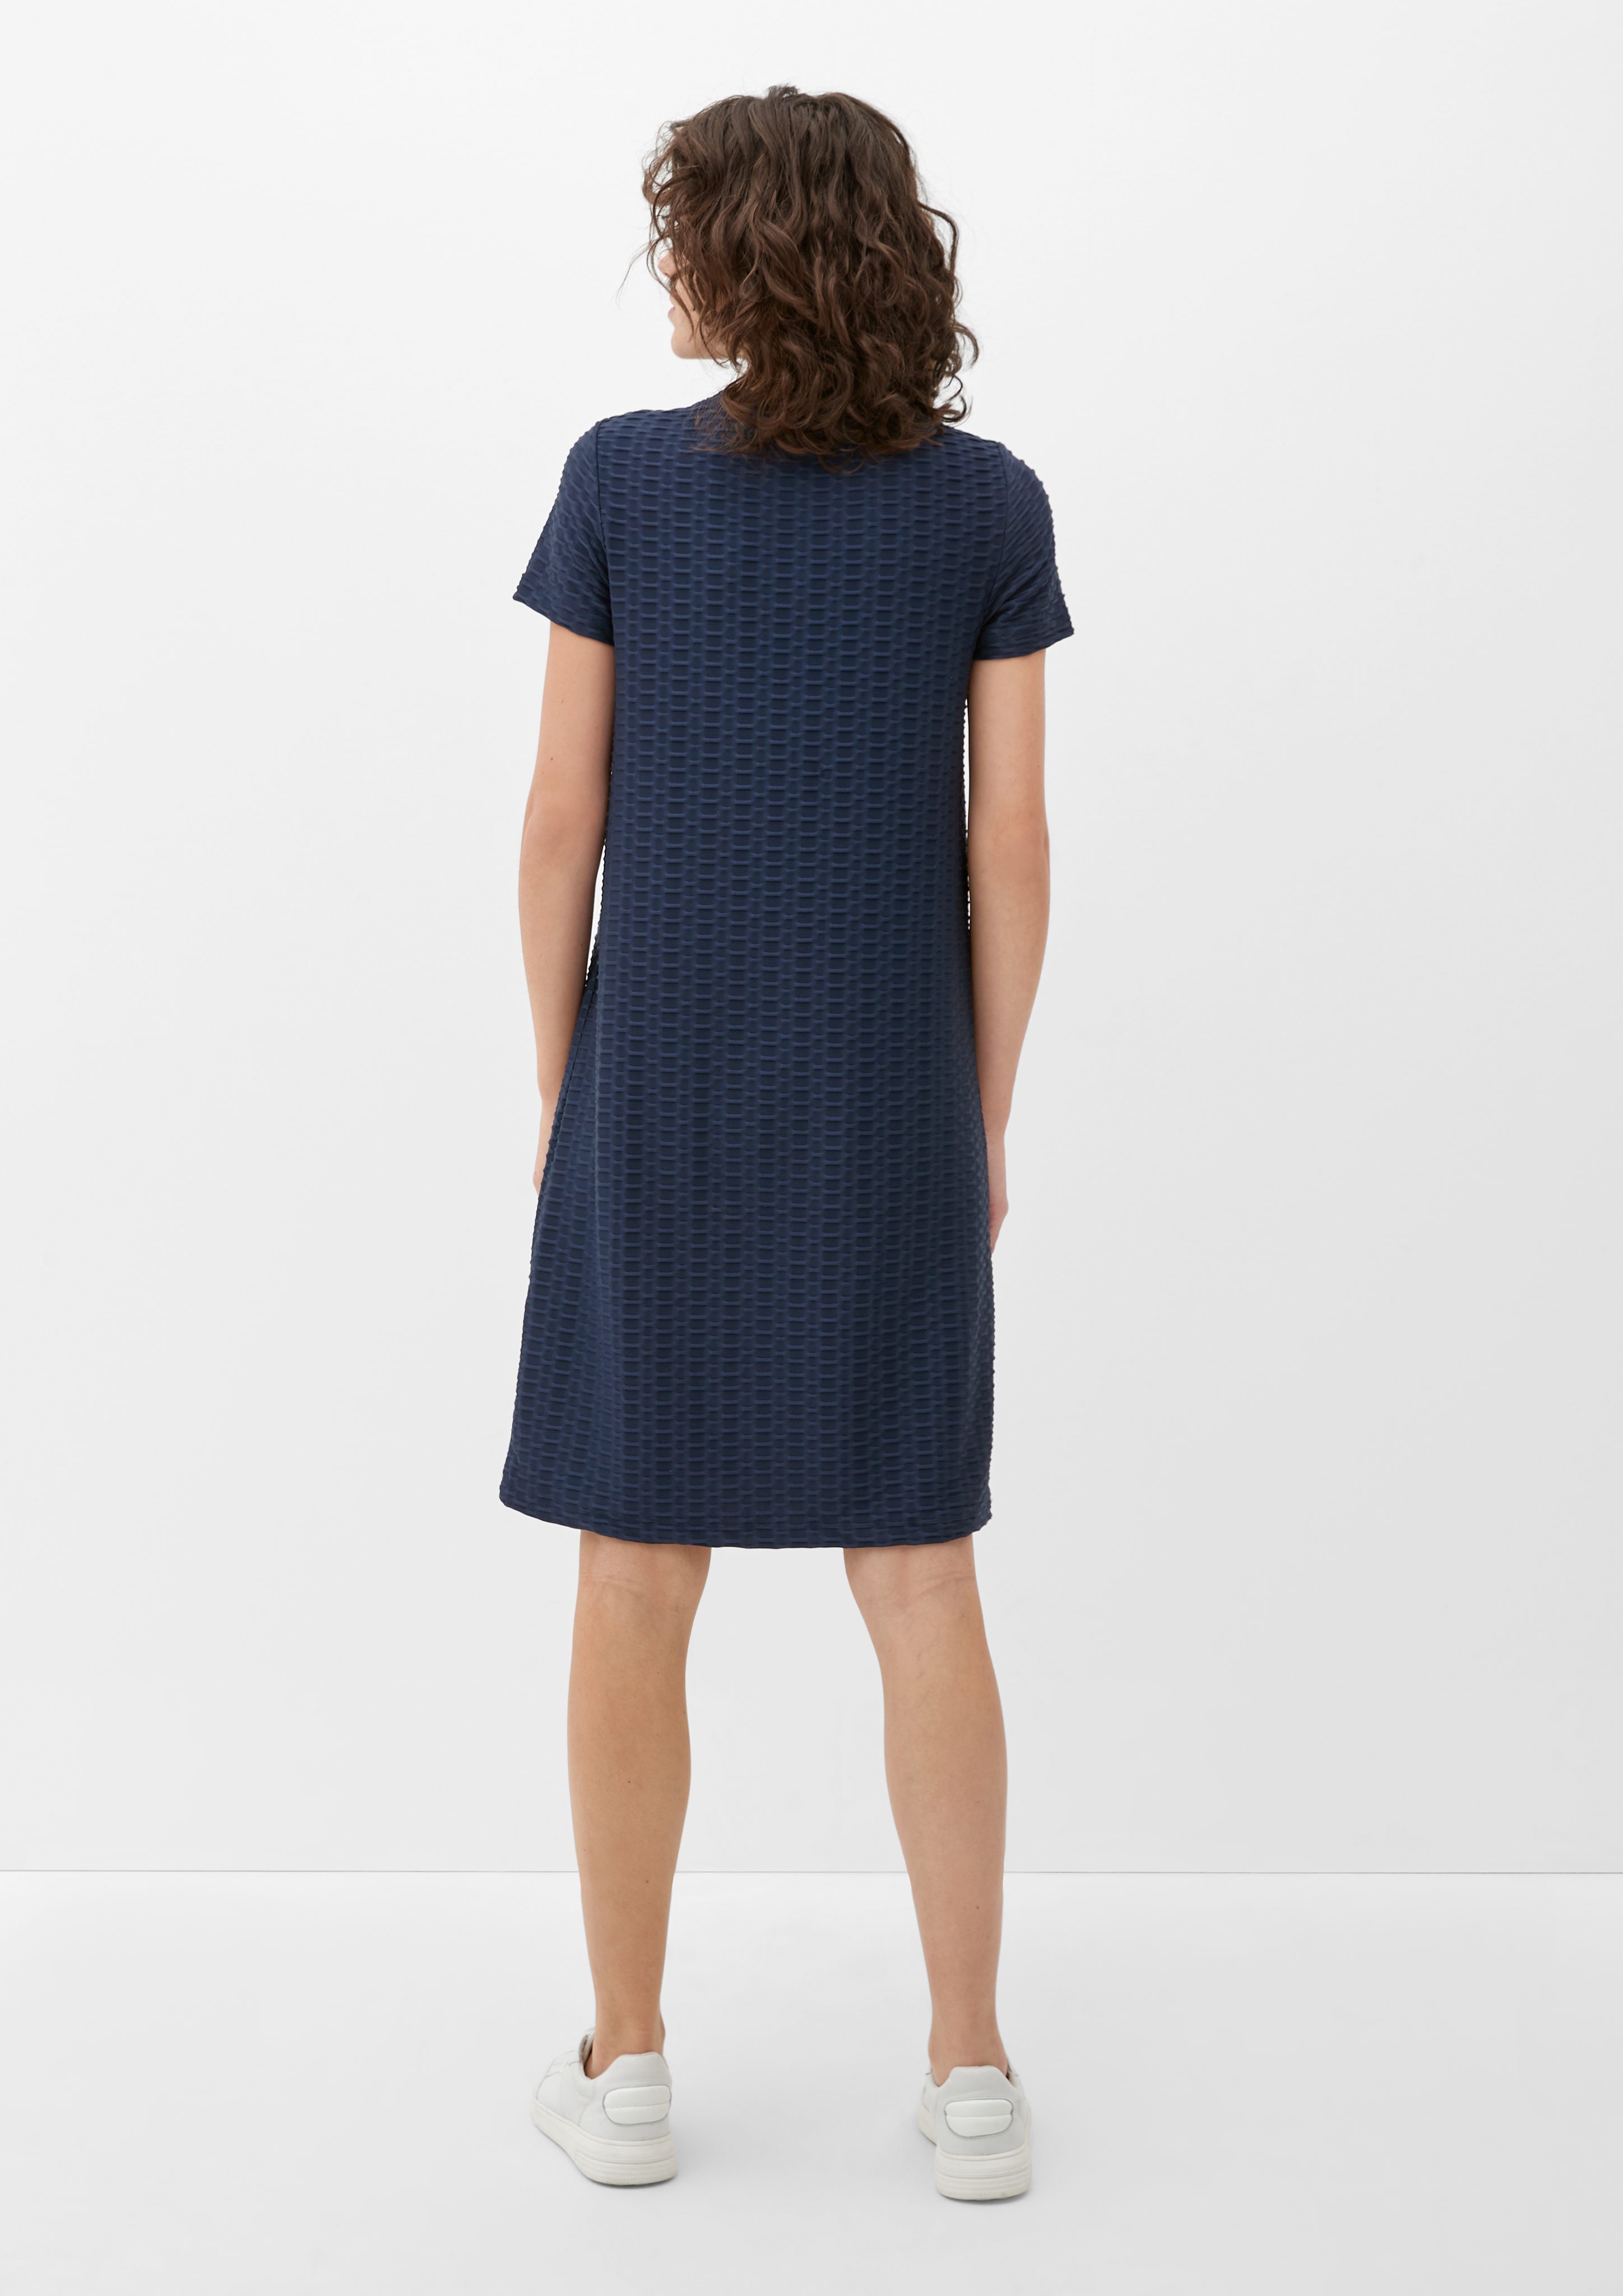 s.Oliver Minikleid Shirt-Kleid mit Strukturmuster